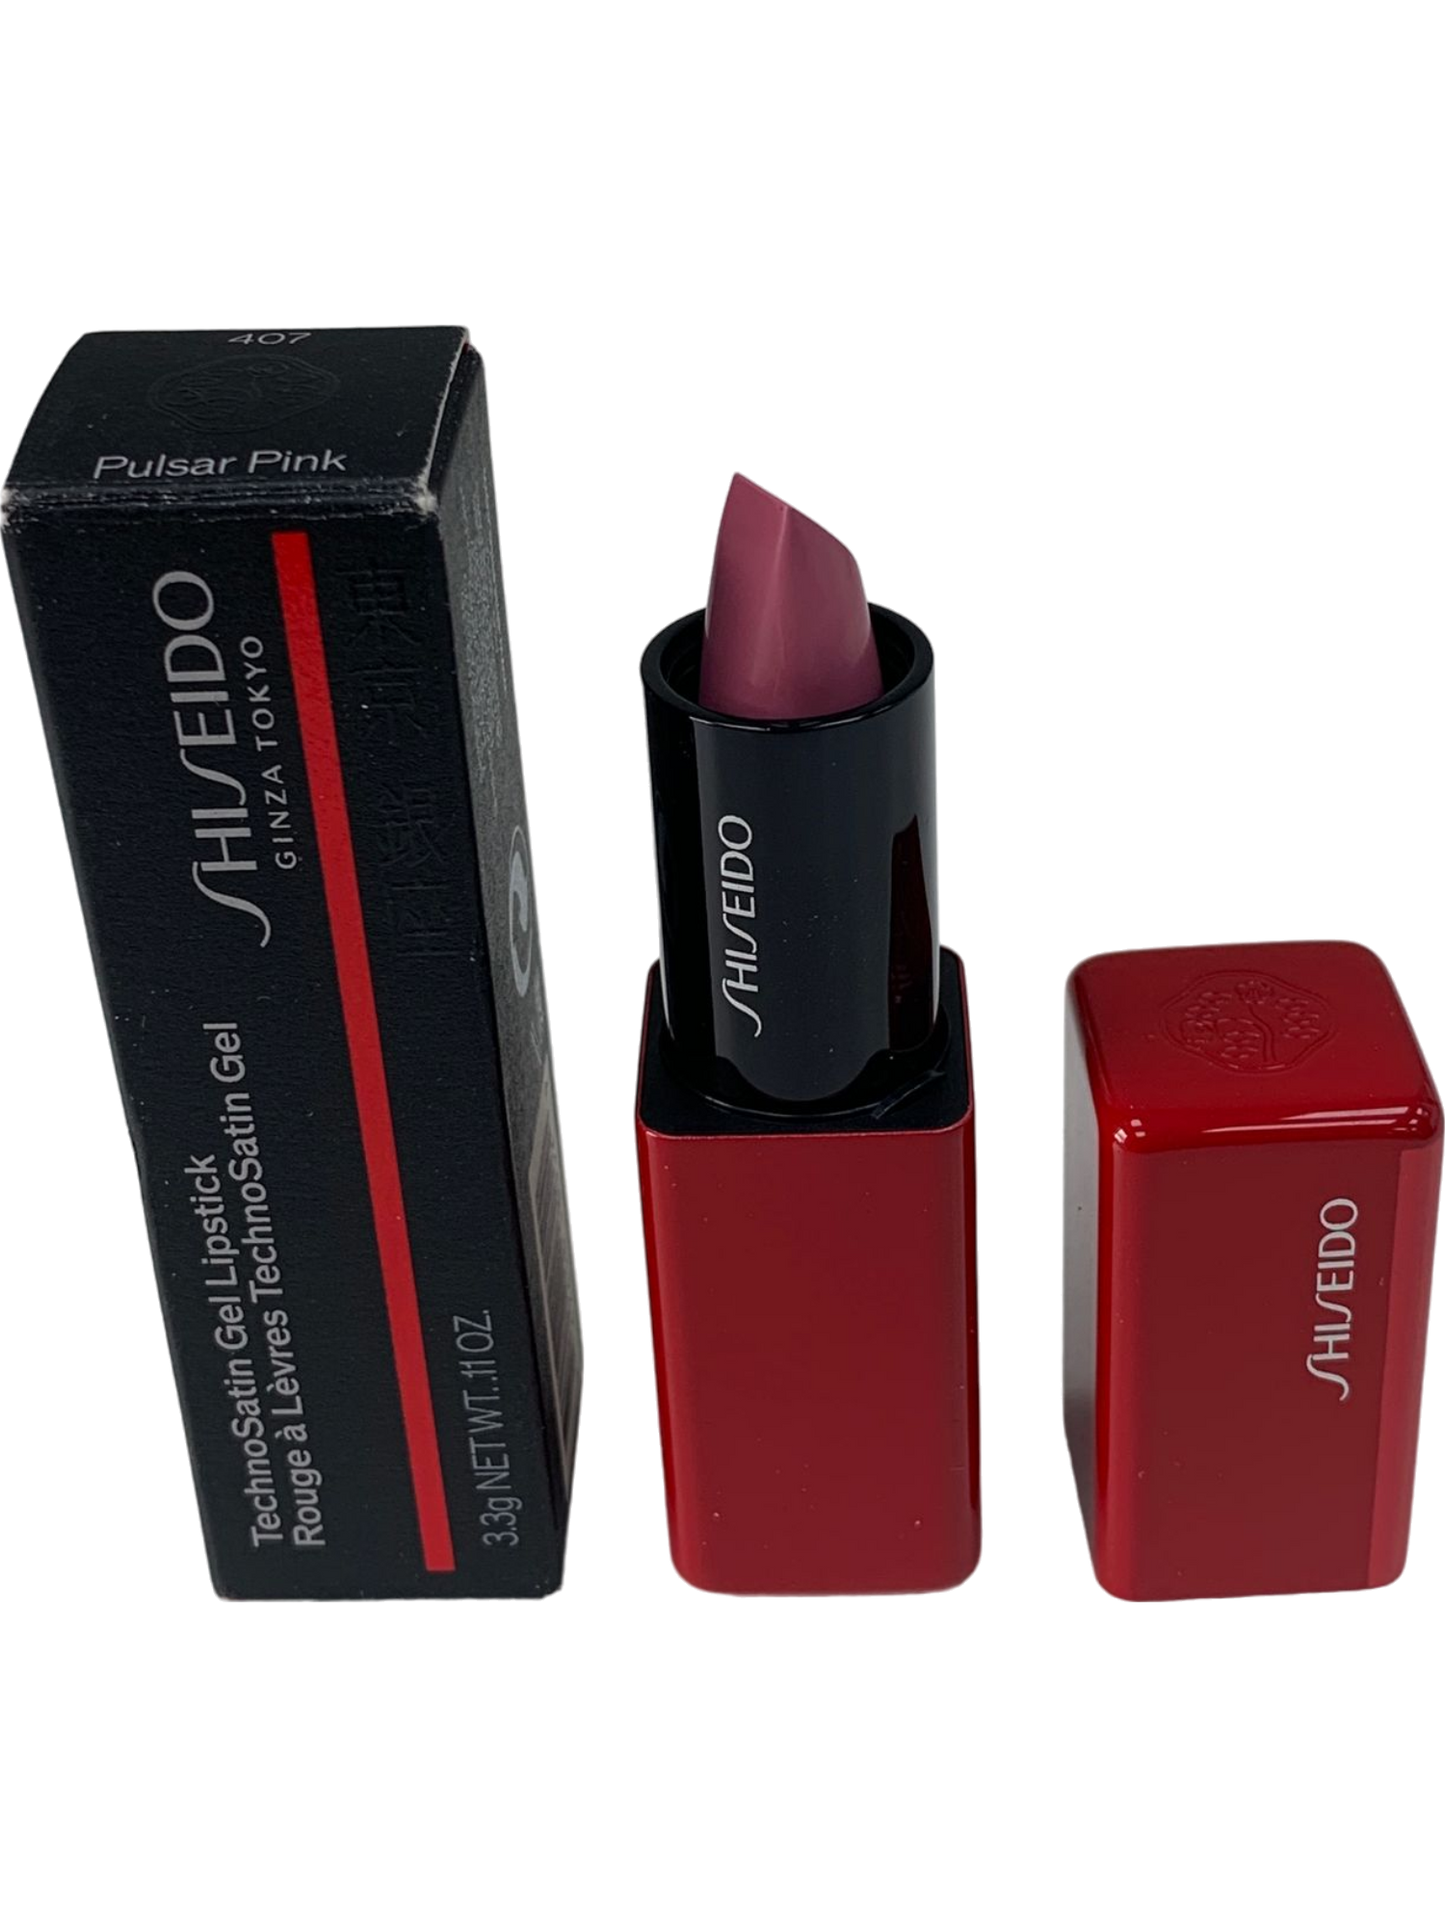 Shiseido Pulsar Pink TechnoSatin Gel Lipstick Satin Finish - 407